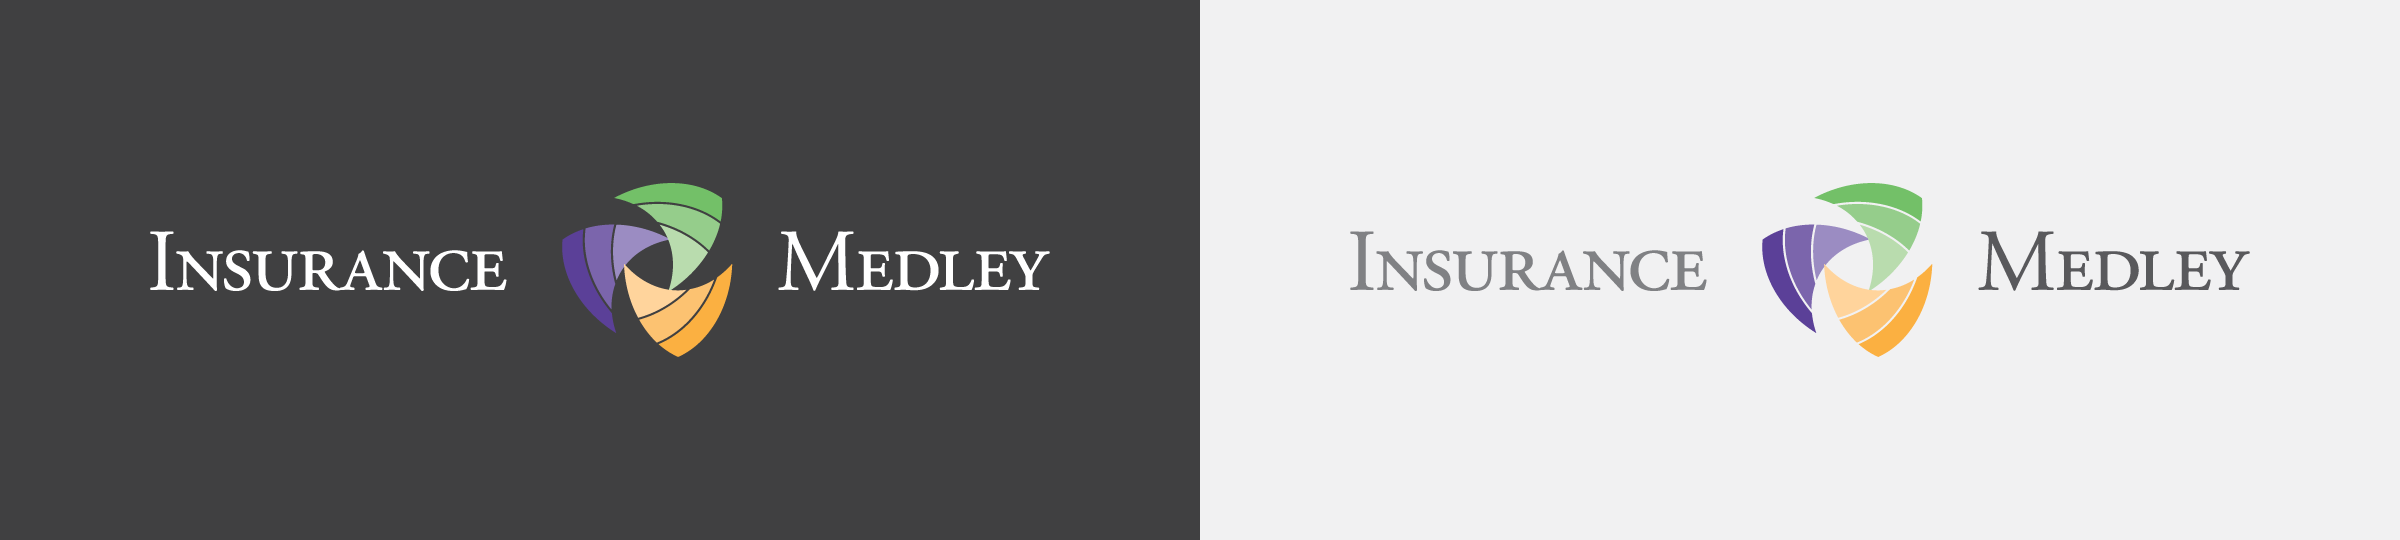 Insurance Medley Logo Color Variants